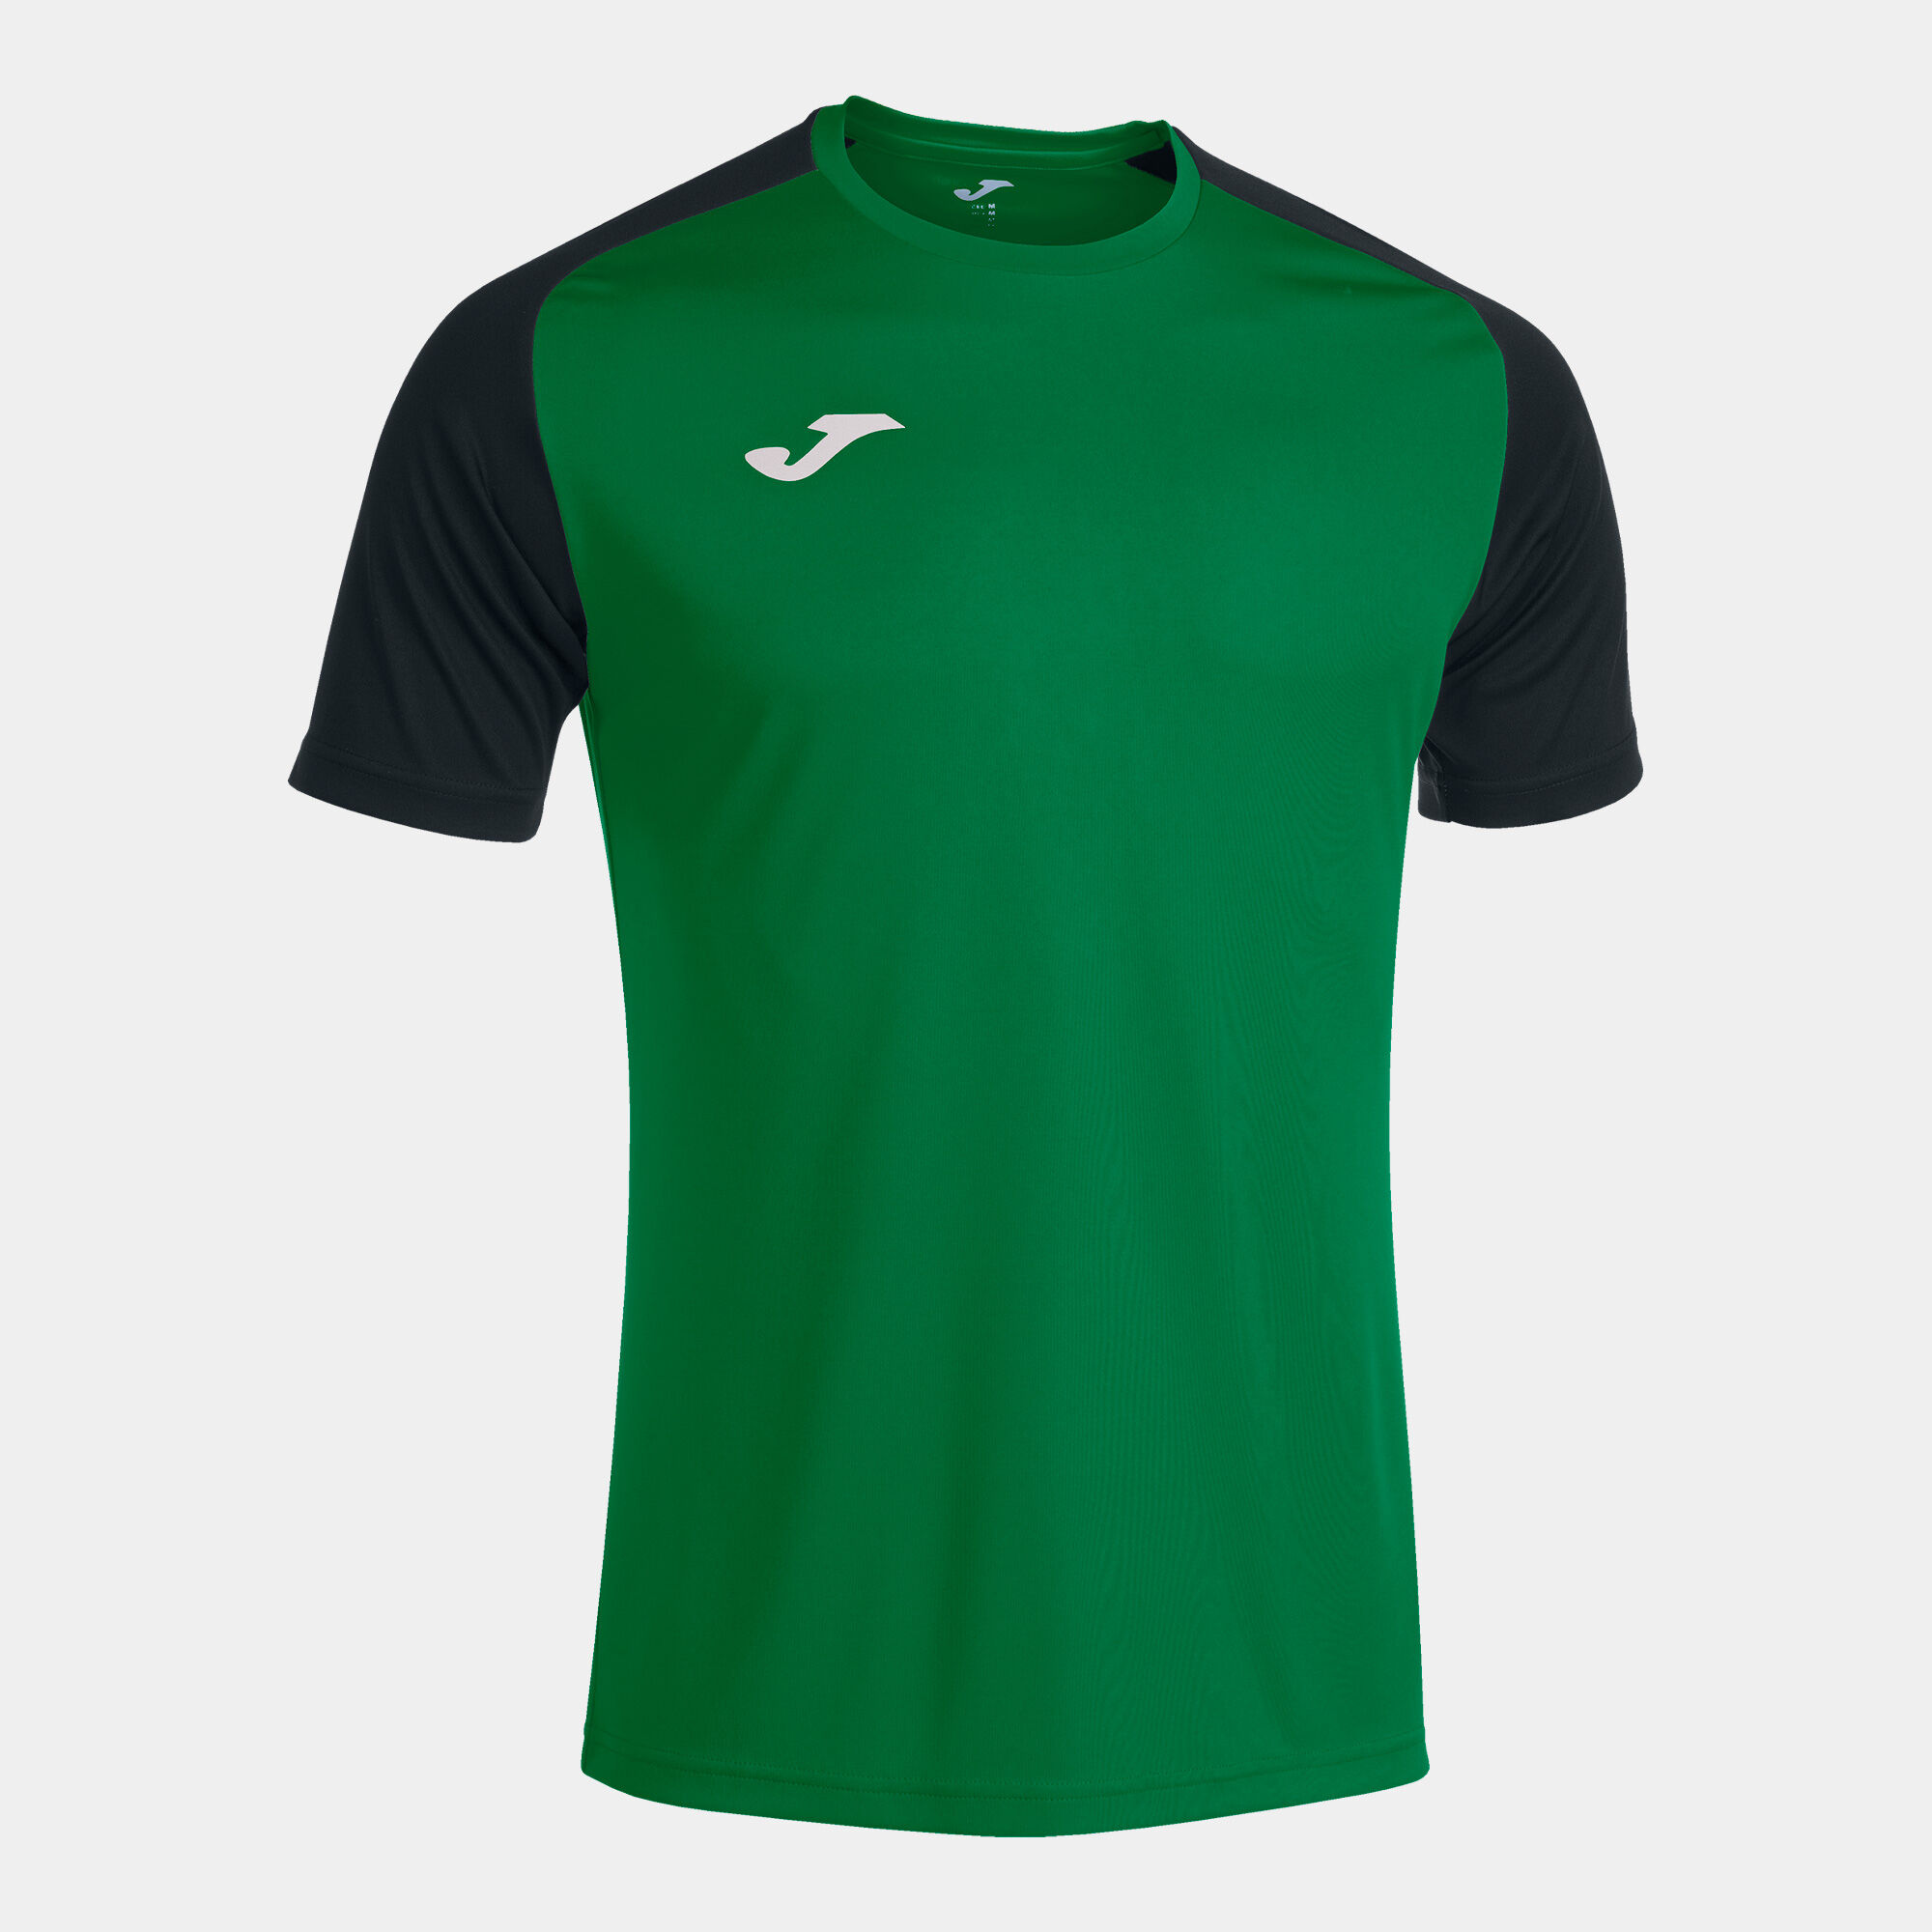 Shirt short sleeve man Academy IV green black